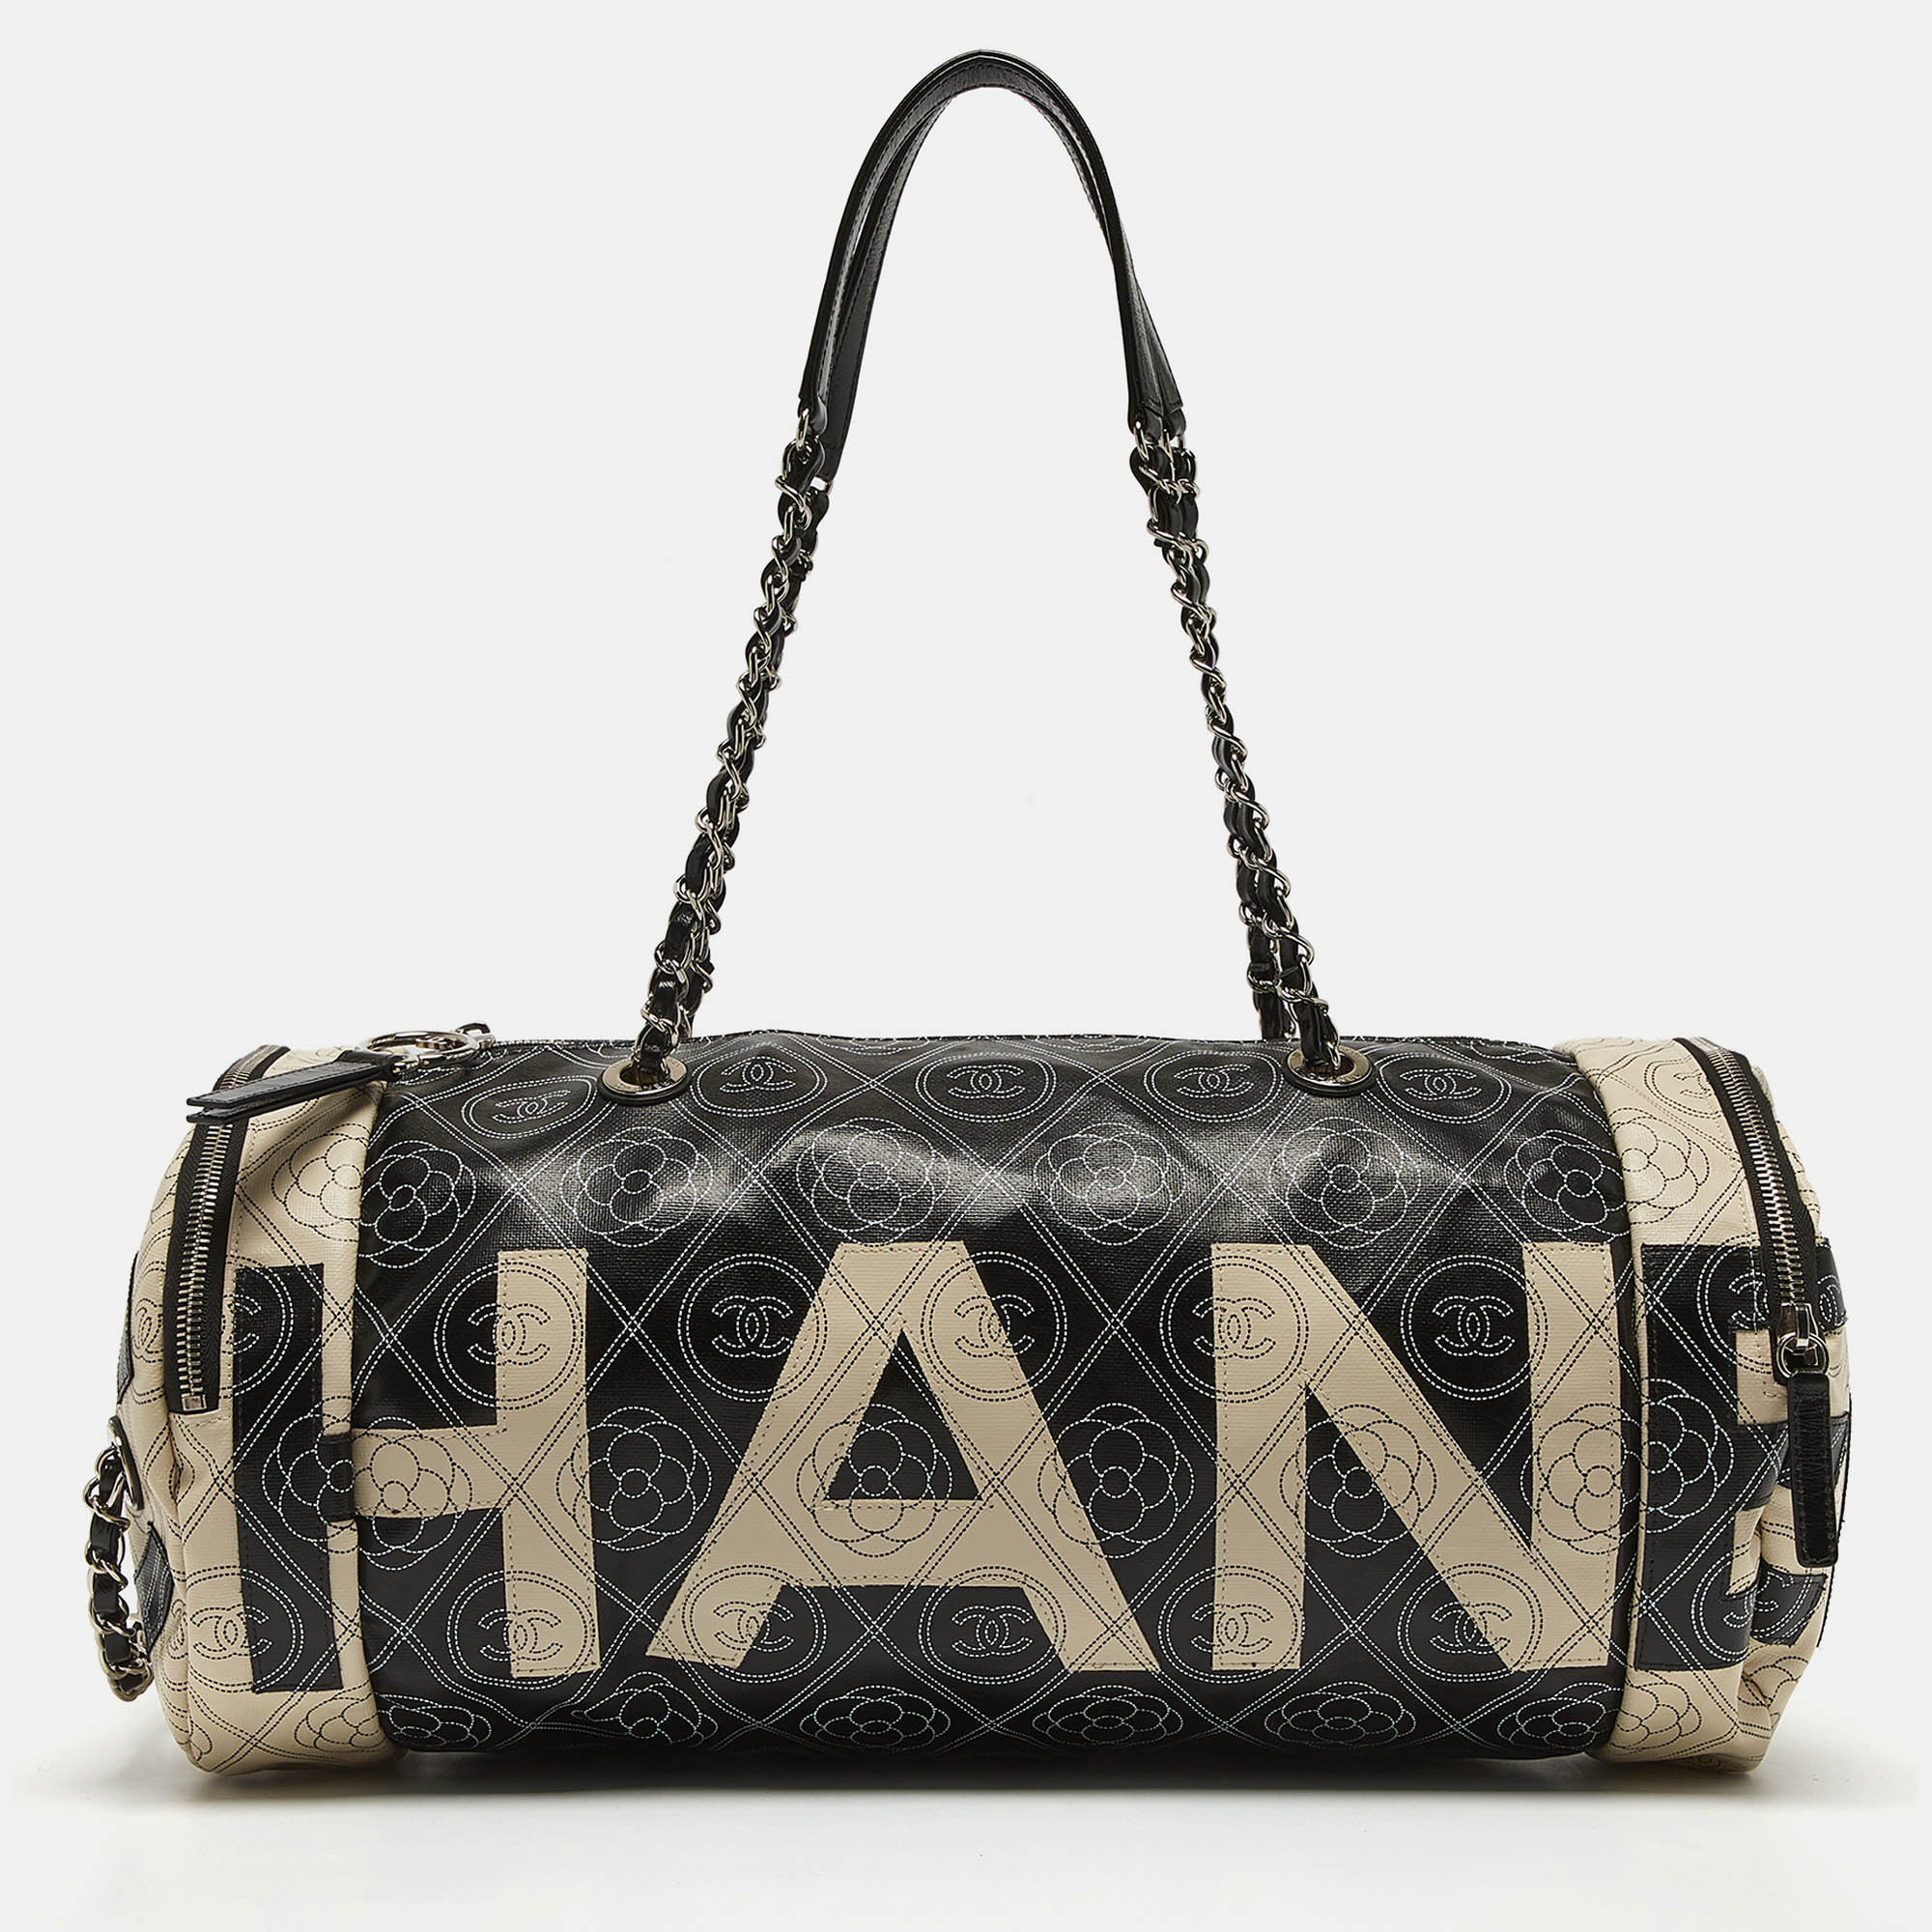 Chanel black/white camellia print coated canvas bowler bag